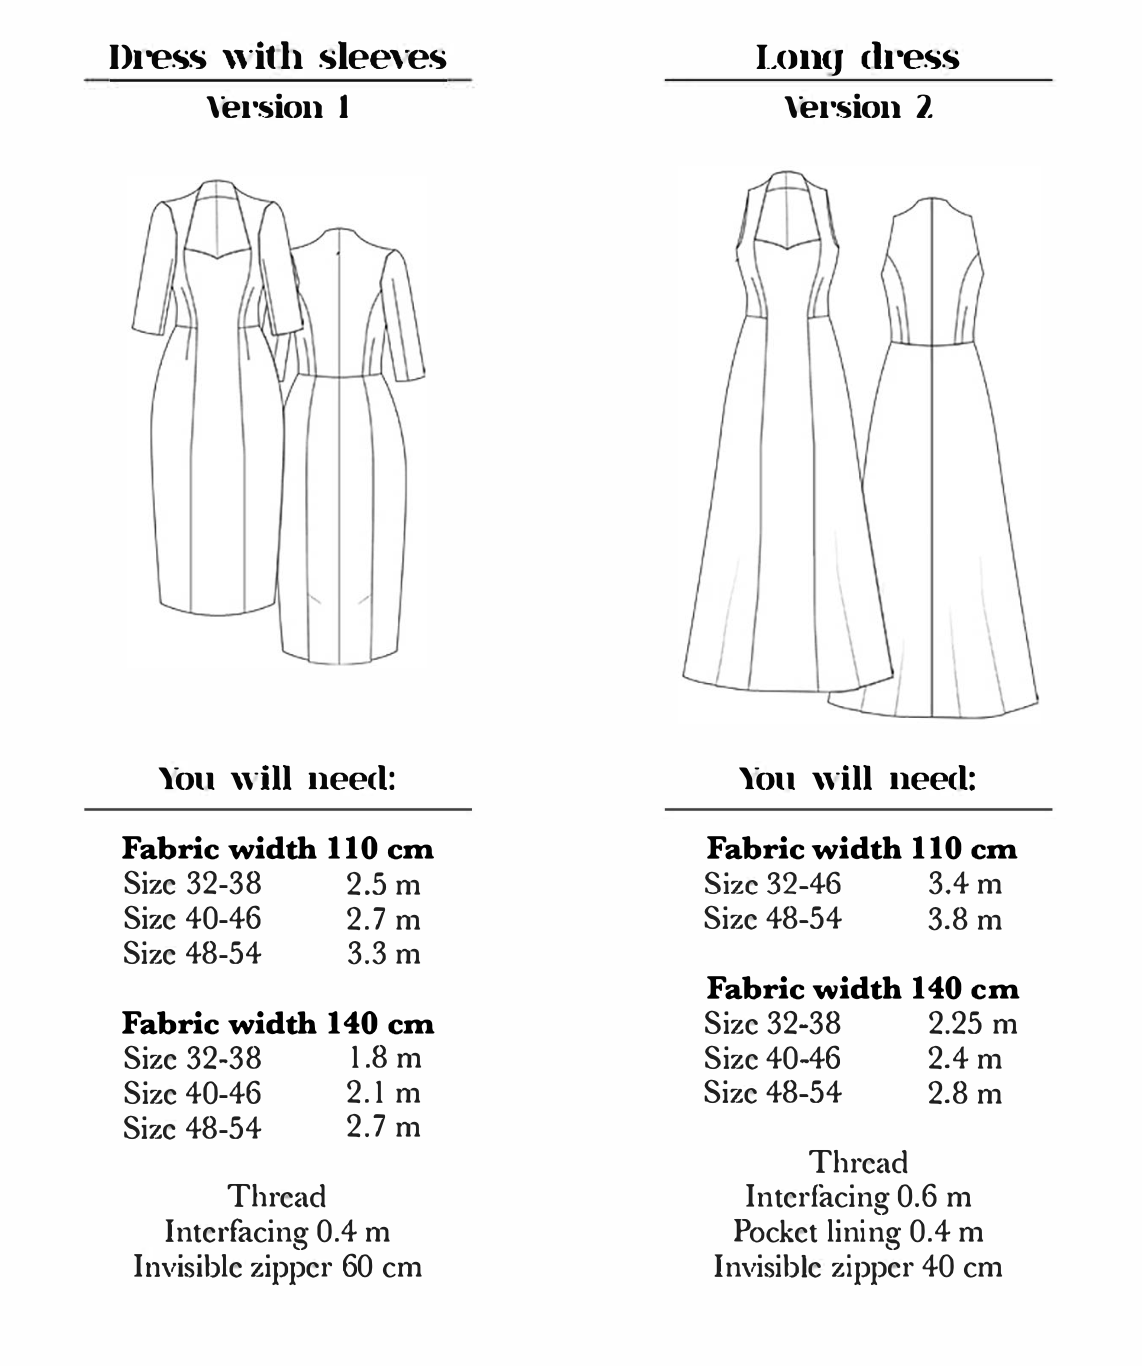 How to Do Fashion No. 23 Marrakesh Dress